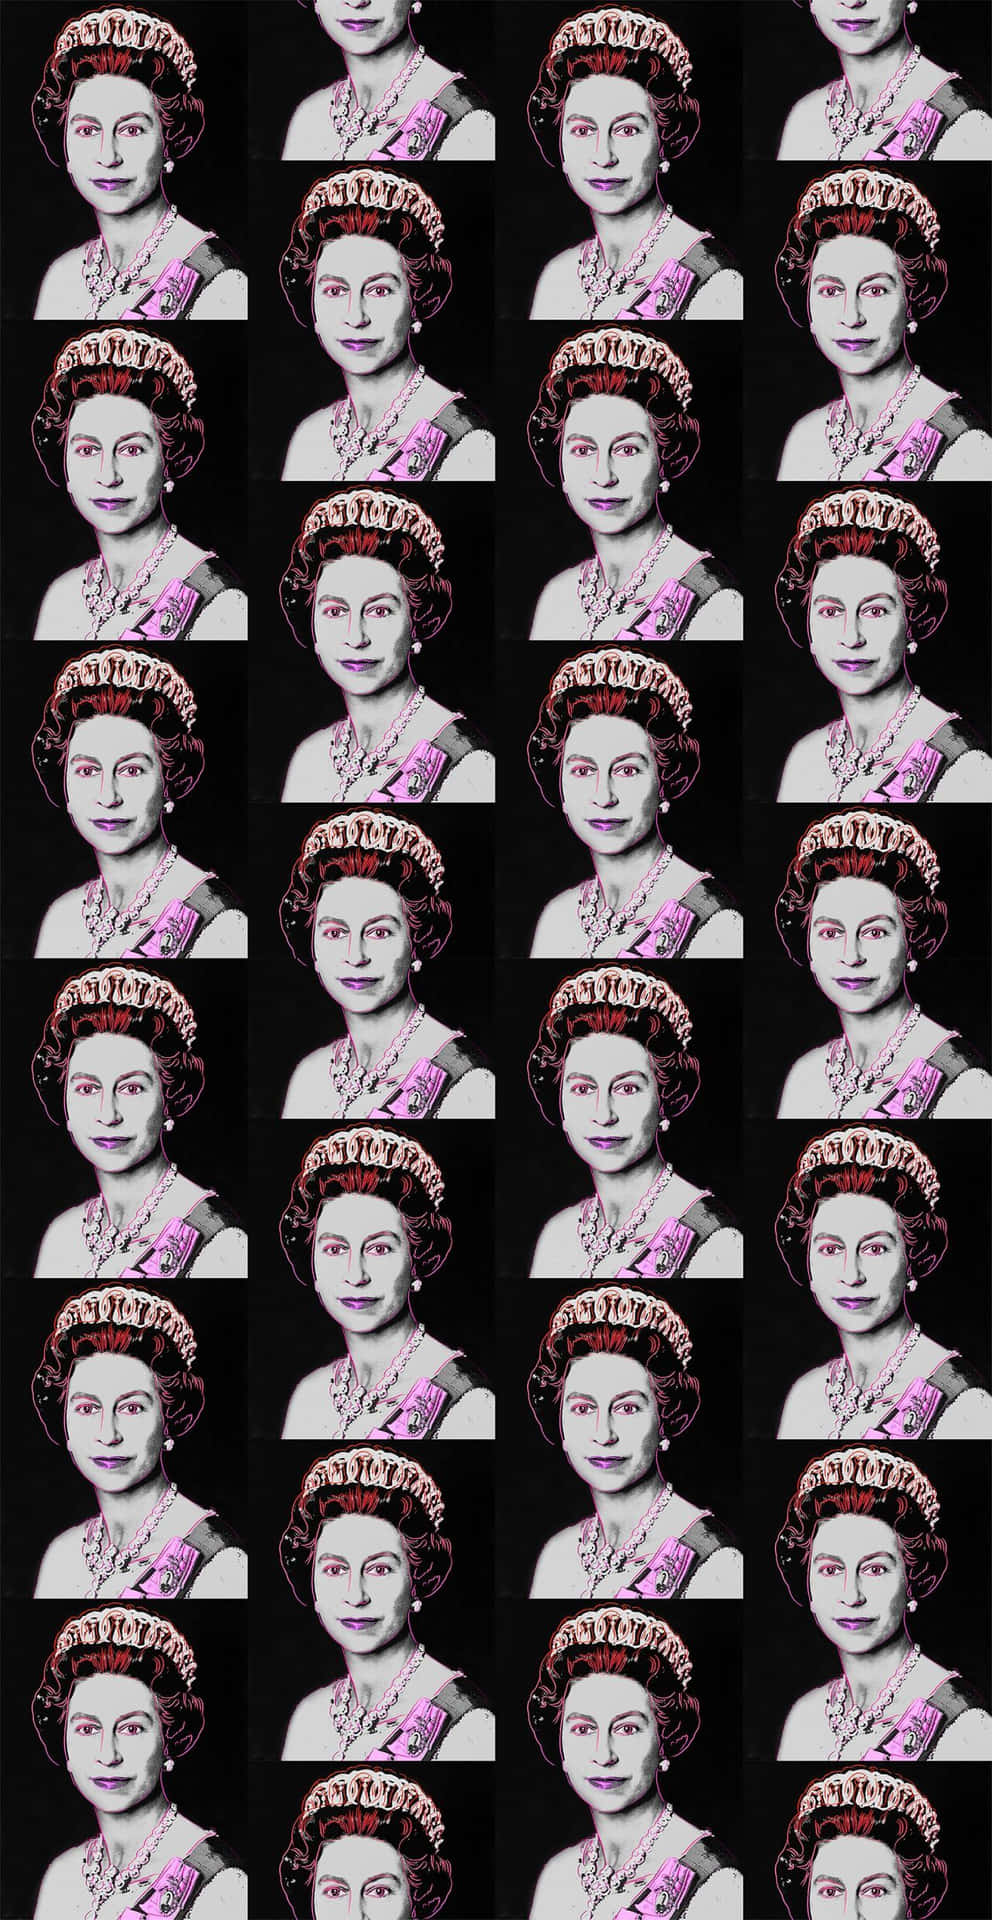 A portrait of Queen Elizabeth II in a royal blue ensemble